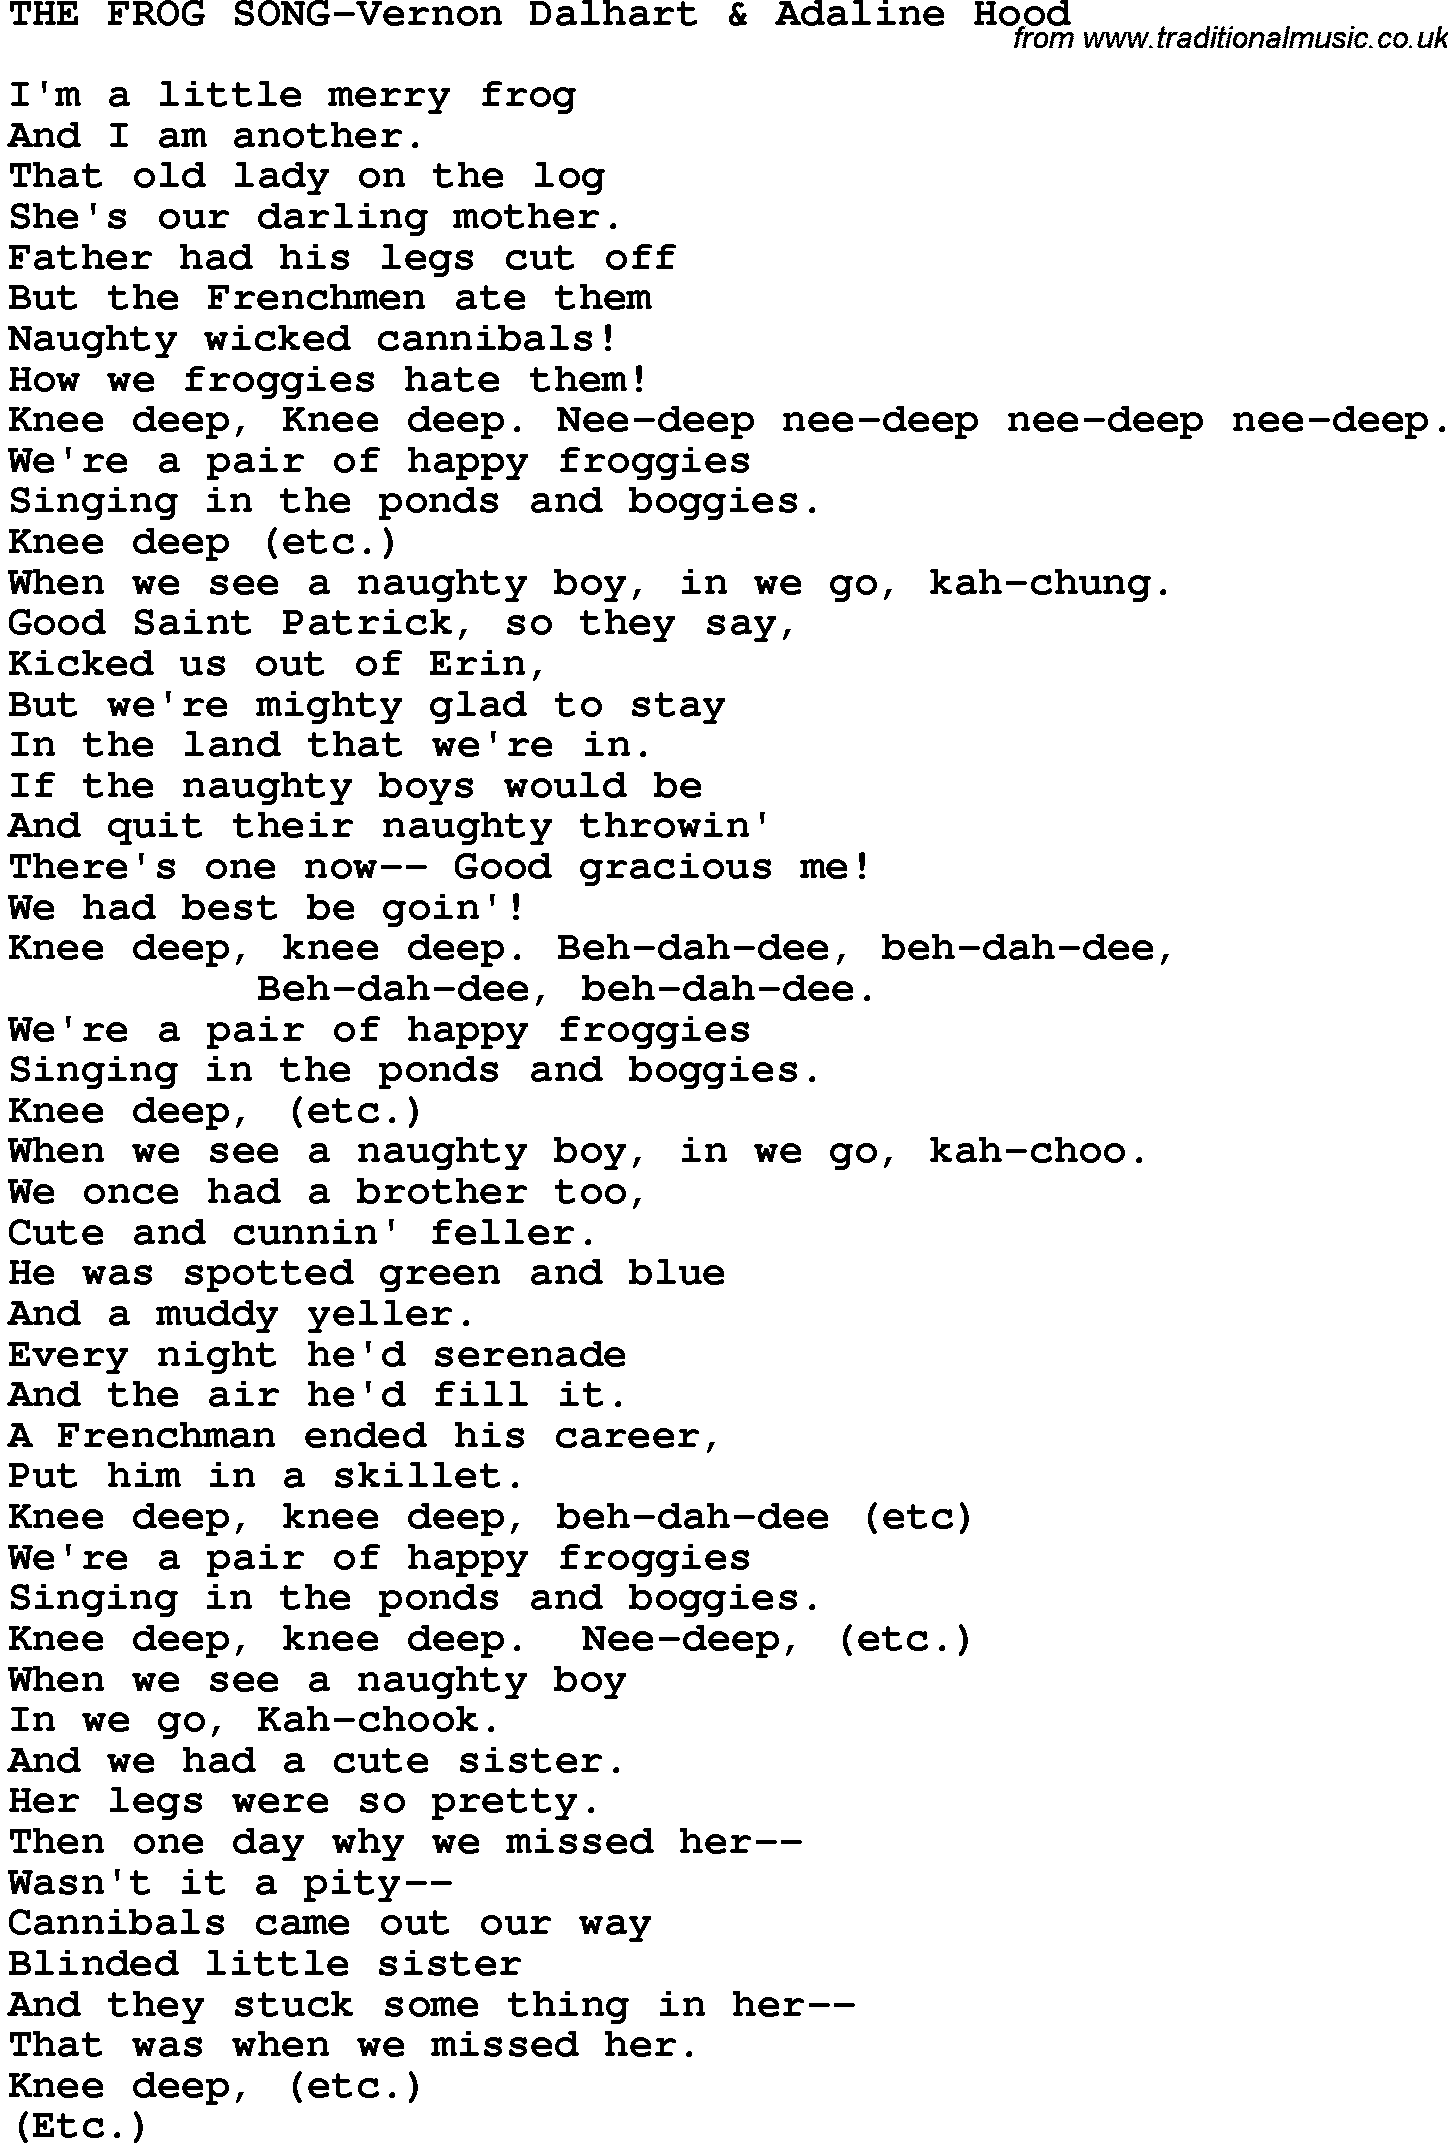 Novelty song: The Frog Song-Vernon Dalhart & Adaline Hood lyrics